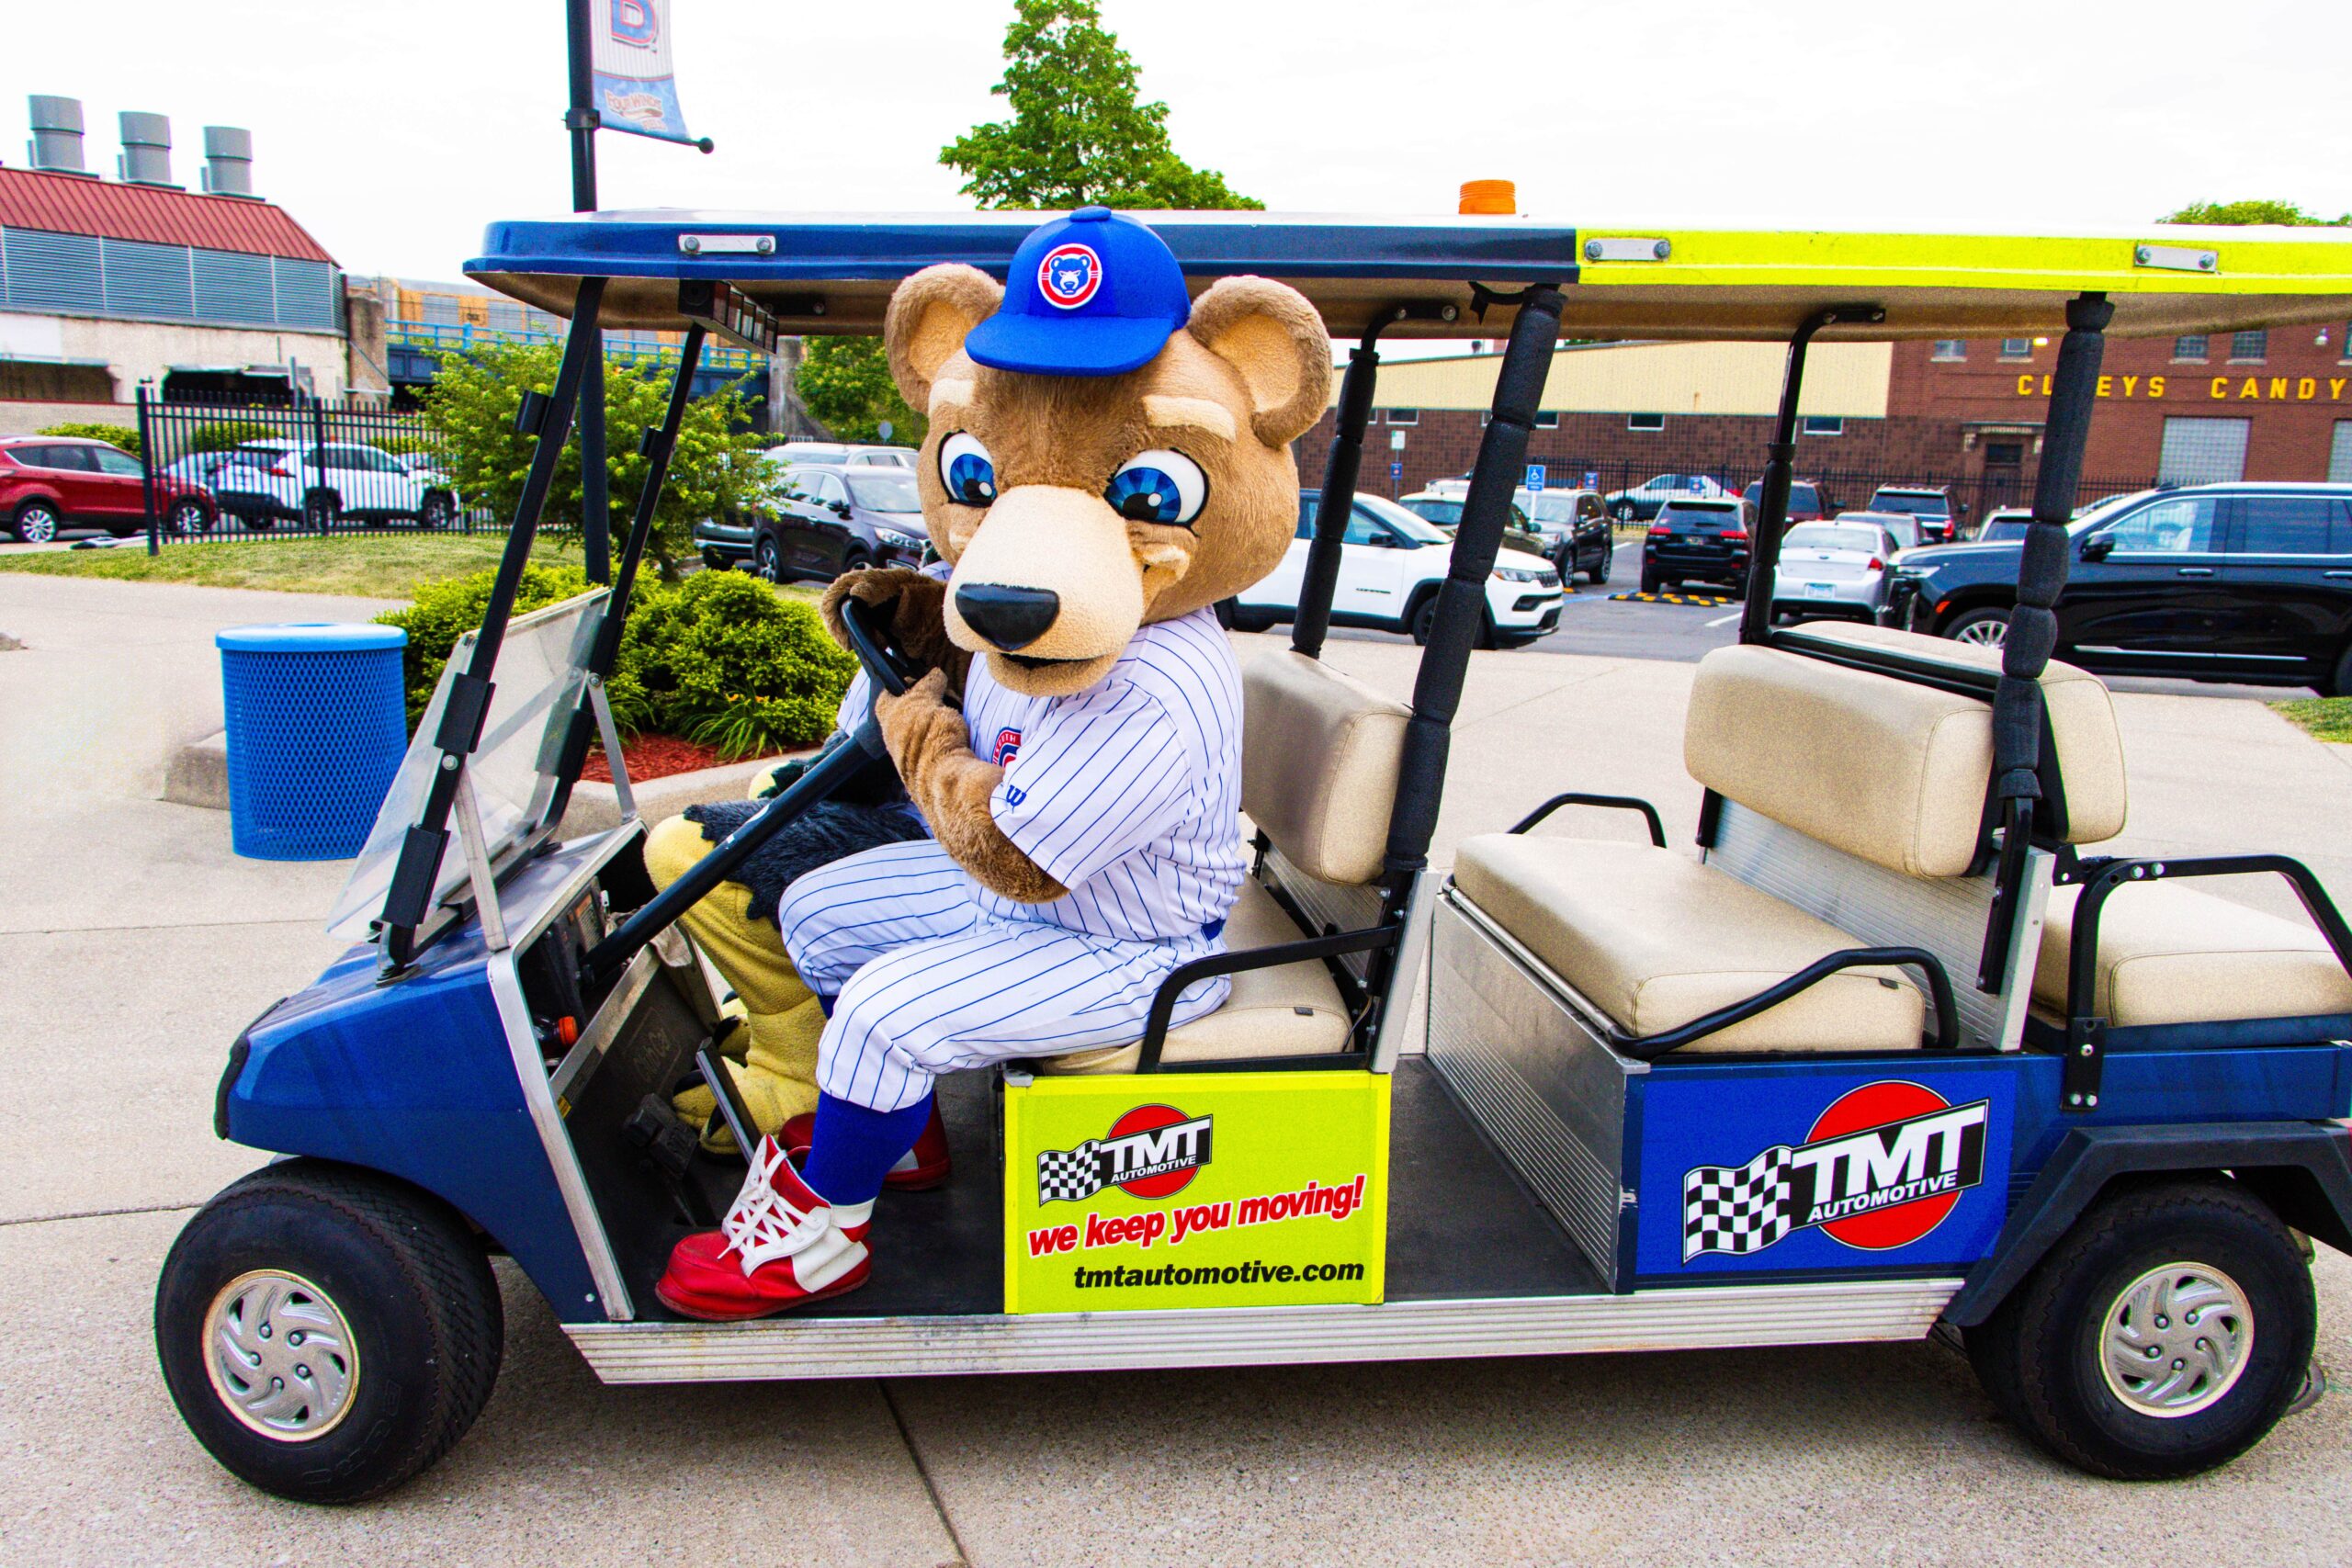 South Bend Cubs mascot on TMT Automotive sponsored golf cart